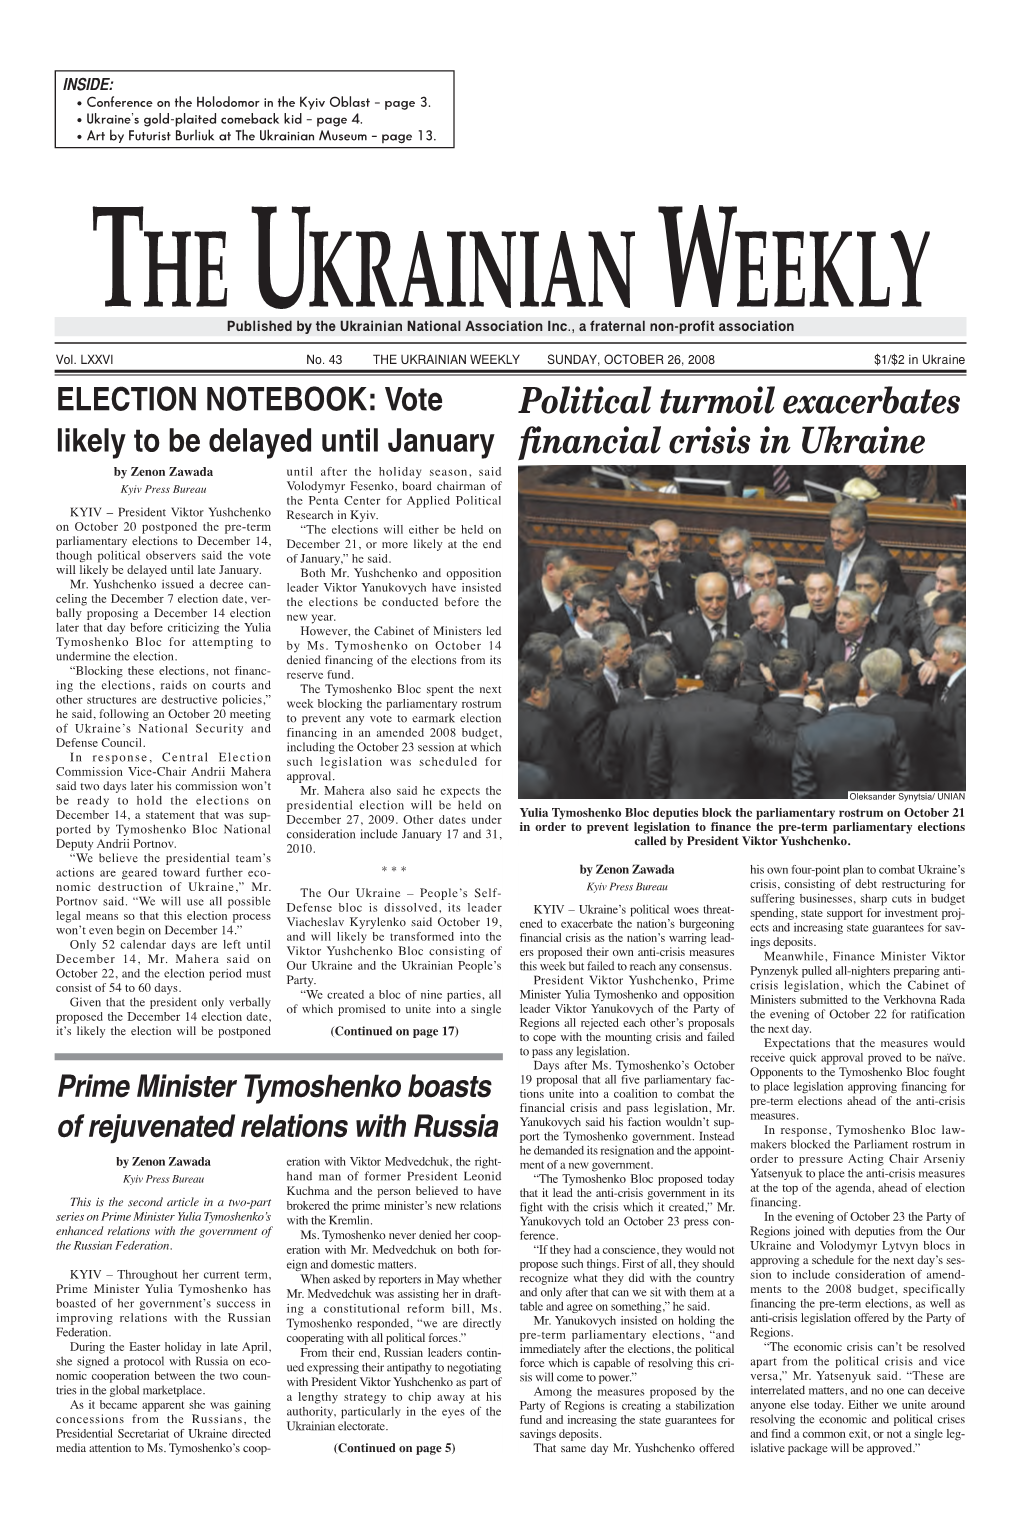 The Ukrainian Weekly 2008, No.43